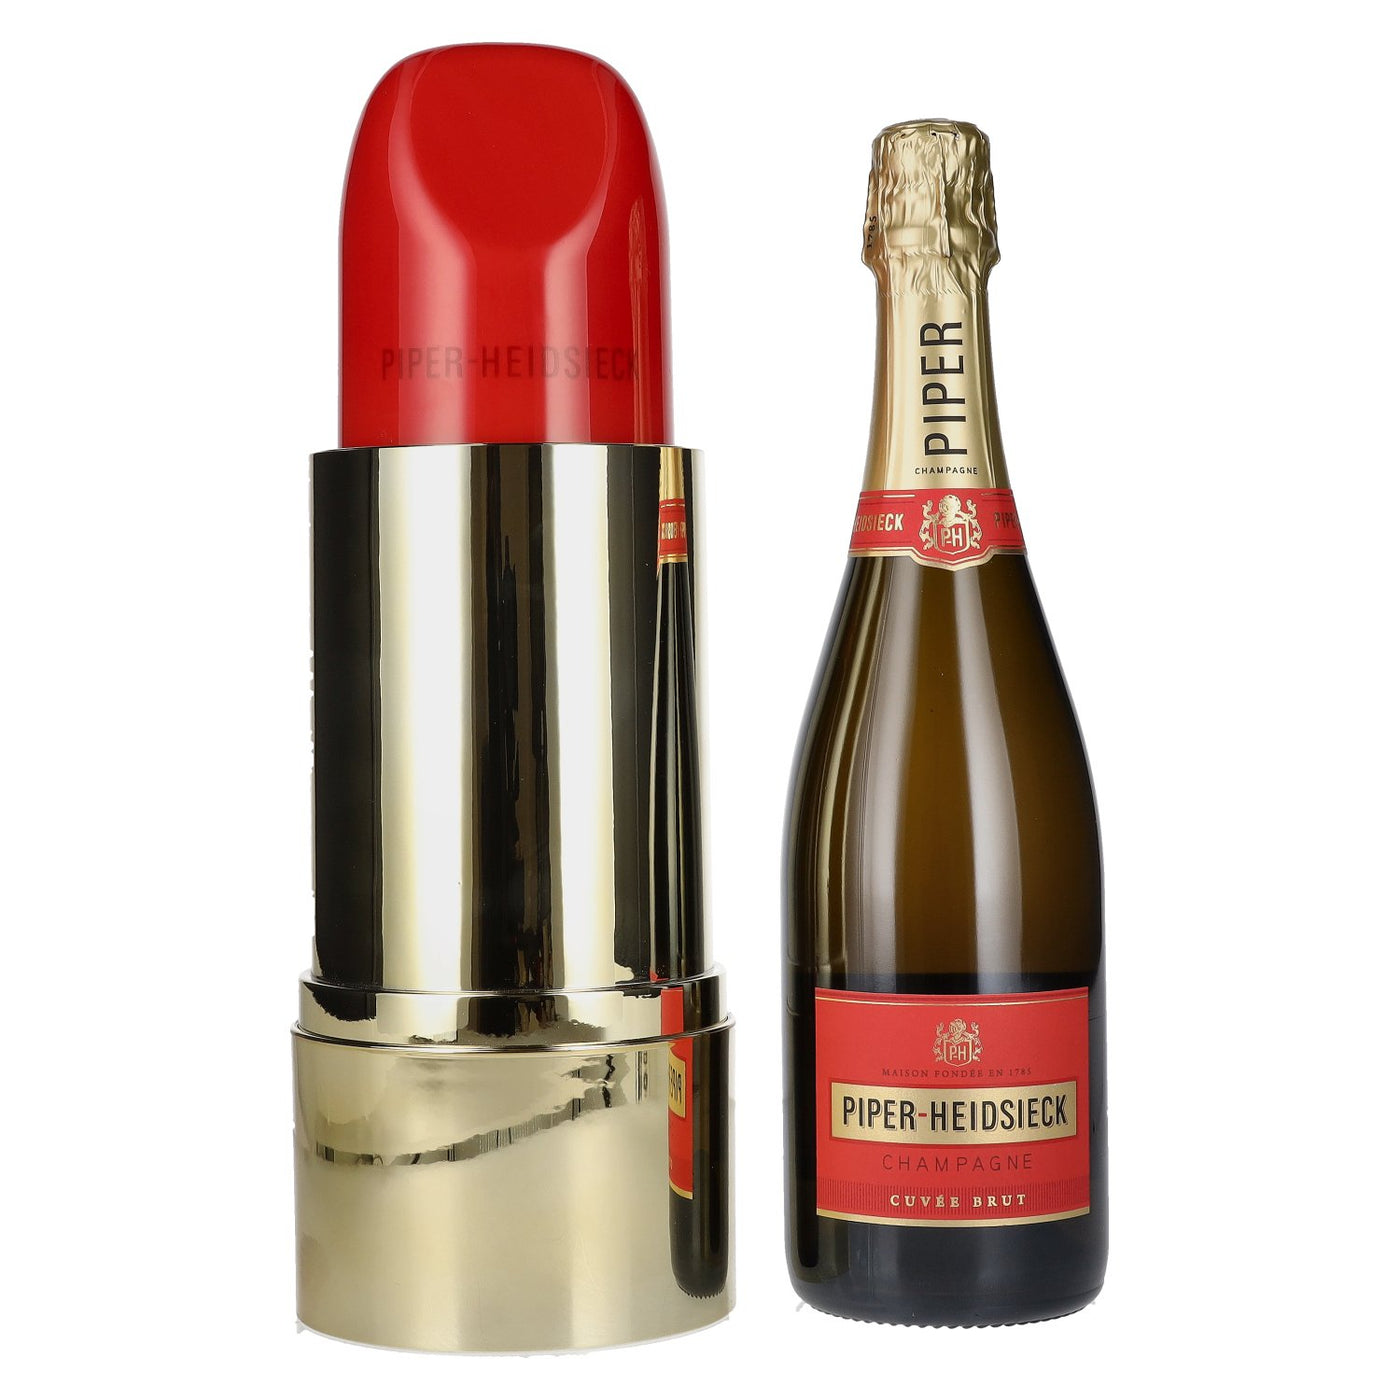 BUY] Piper-Heidsieck Edition Lipstick Heidsieck NV Cuvee | Brut - at